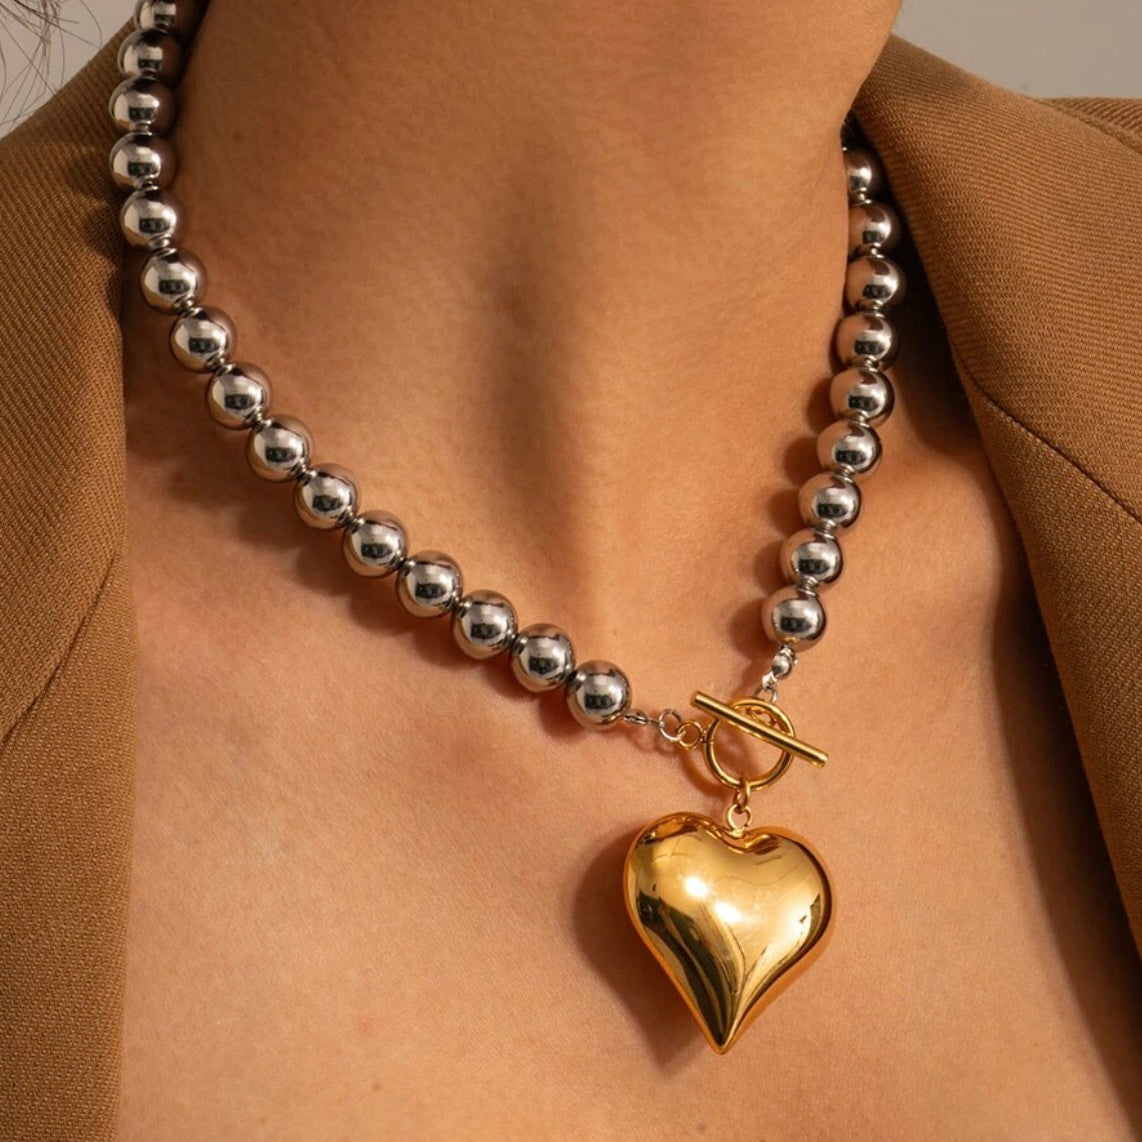 Carmen necklace 💧